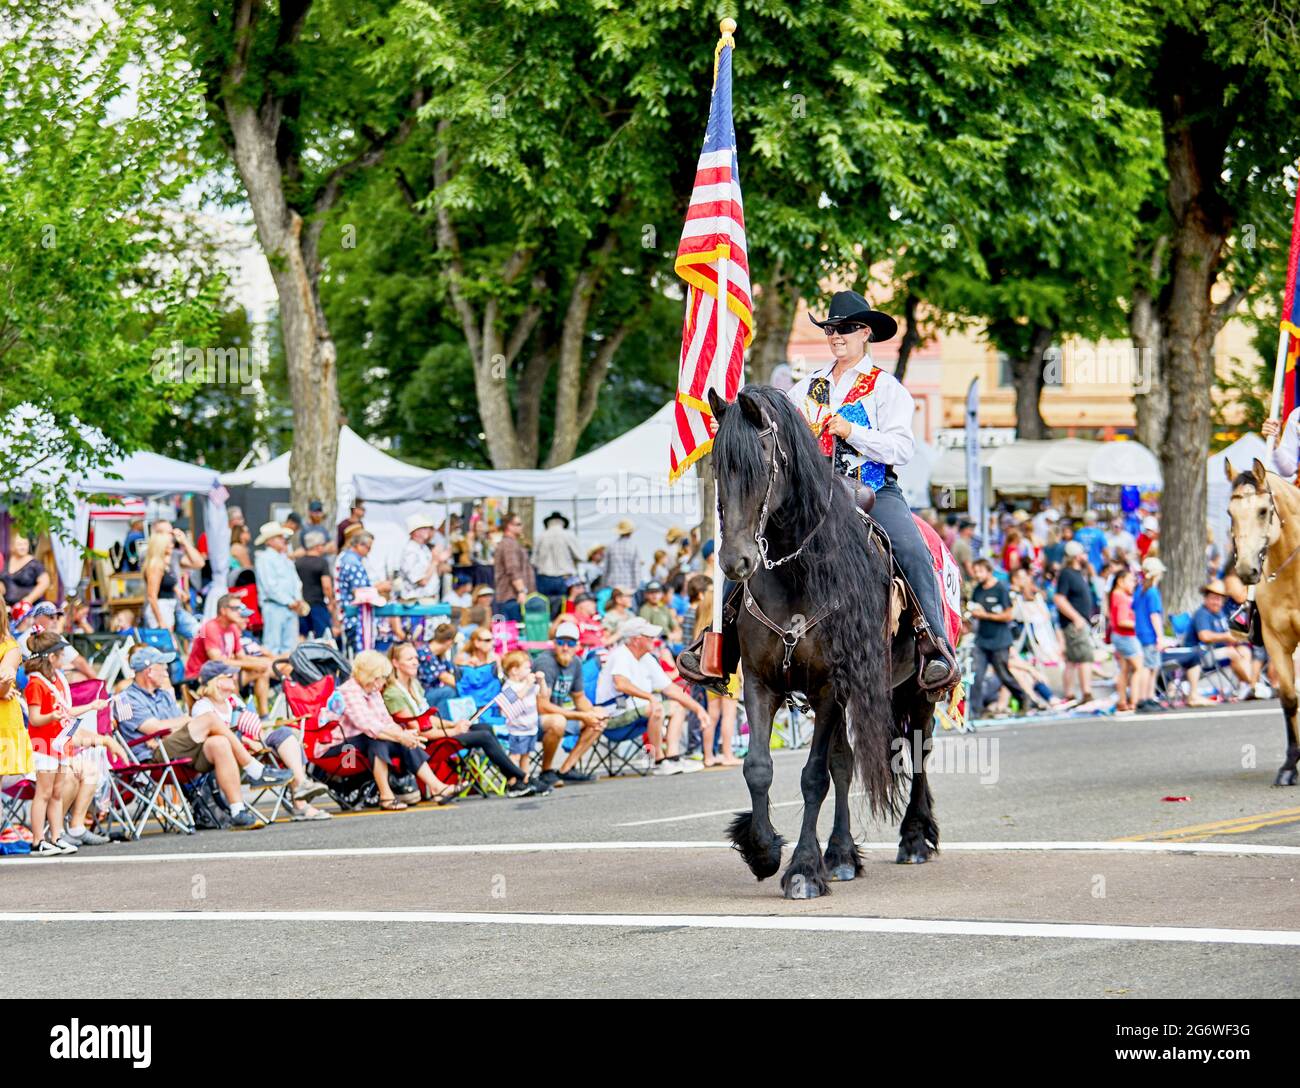 Prescott, Arizona, USA July 3, 2021 Equestrian rider carrying an